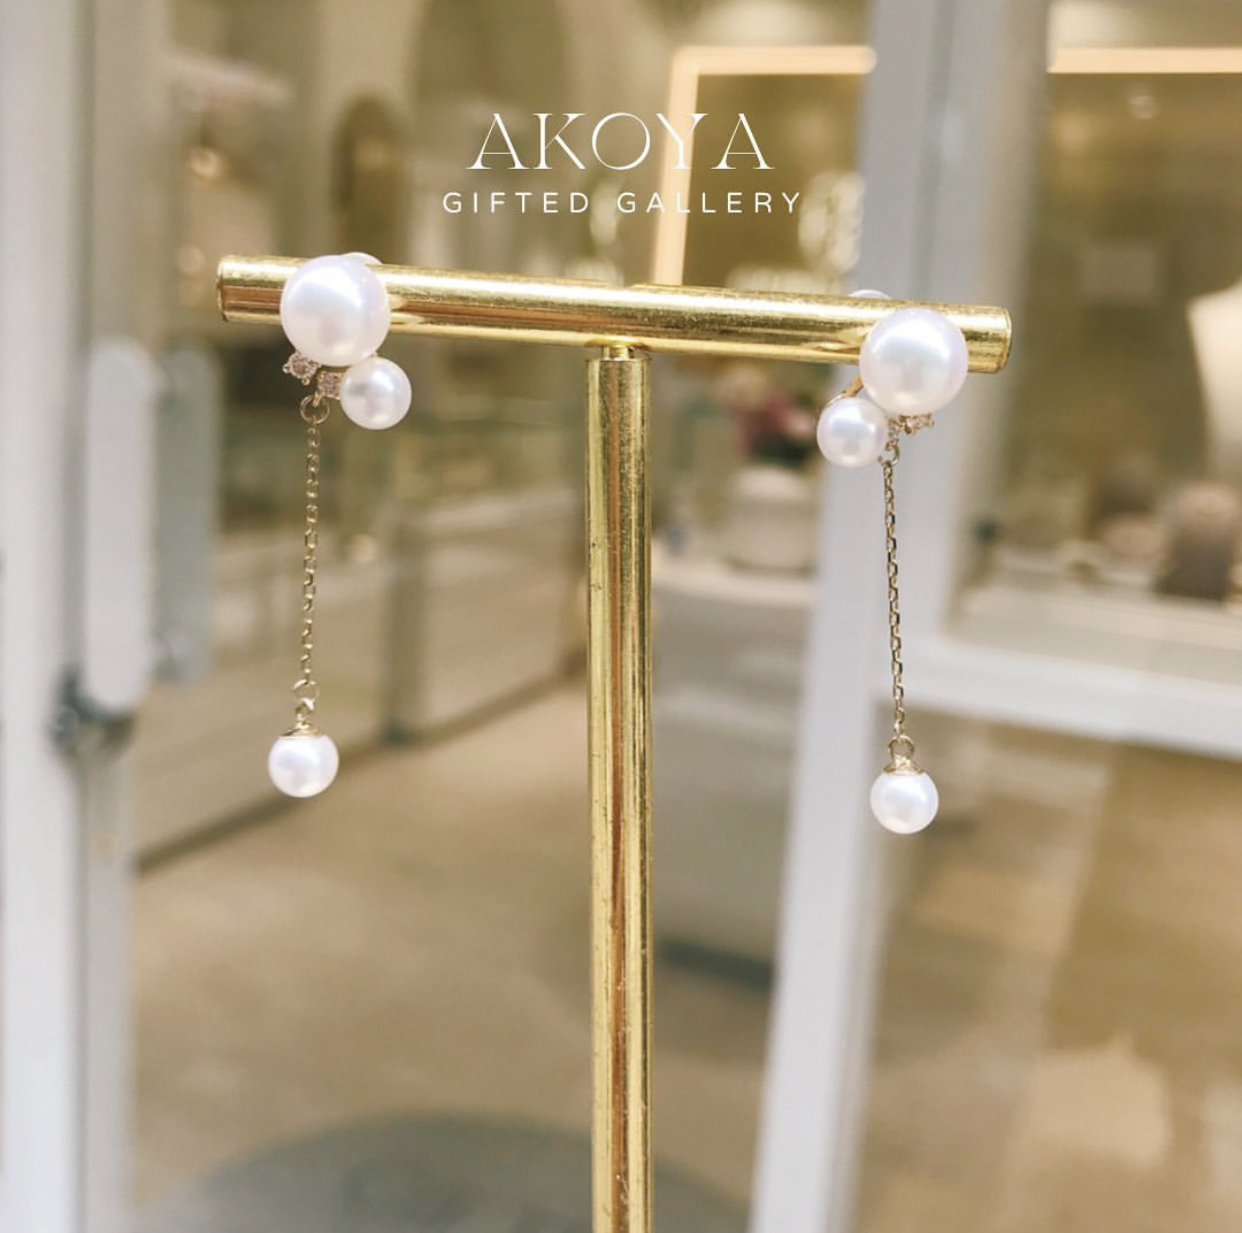 Akoya x Diamond Earrings by Gifted Gallery